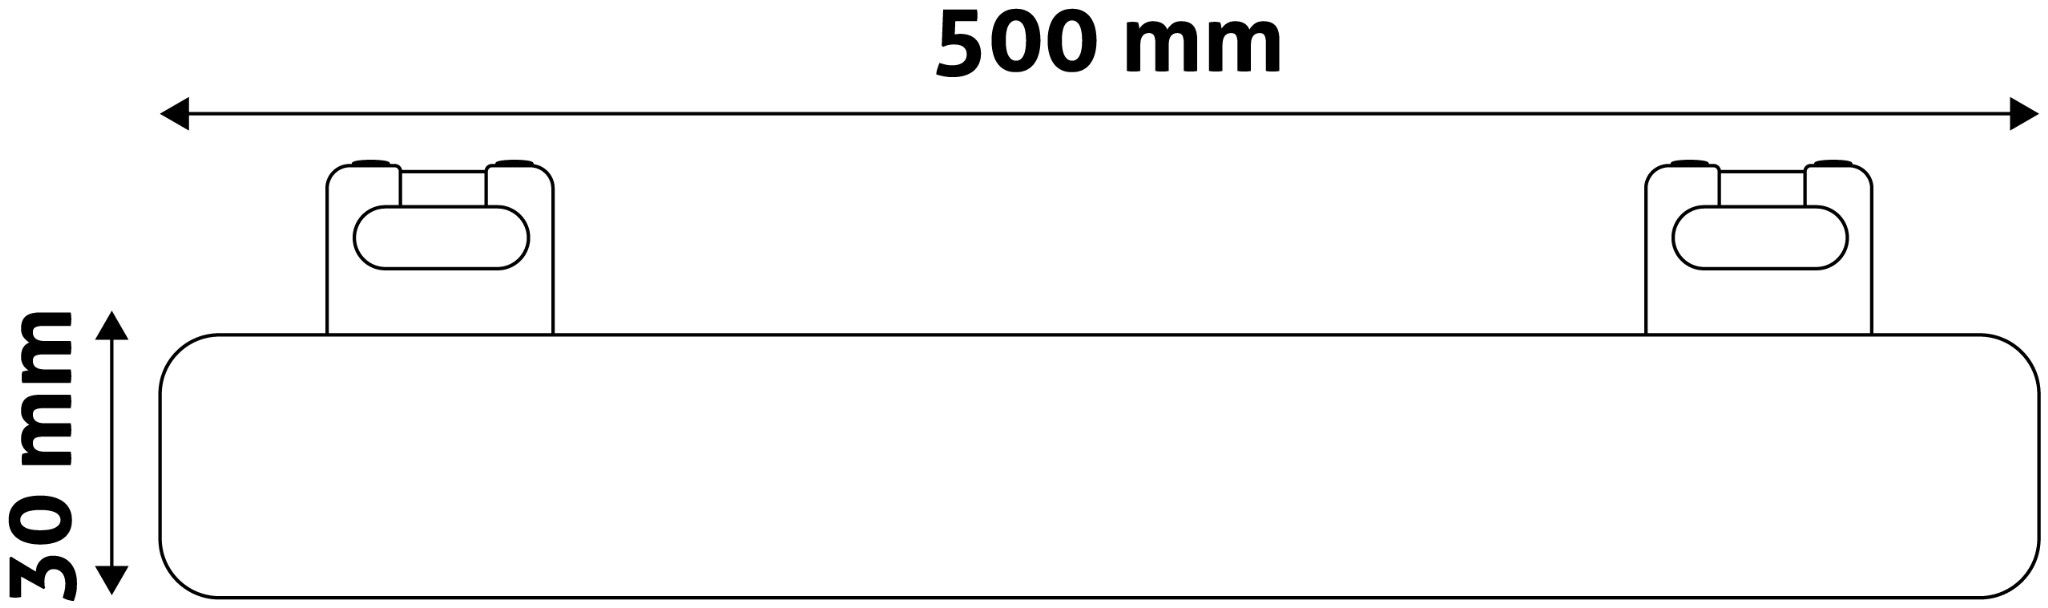 Avide LED Λάμπα Τύπου Linestra 8W 50cm S14s Λευκό 4000K